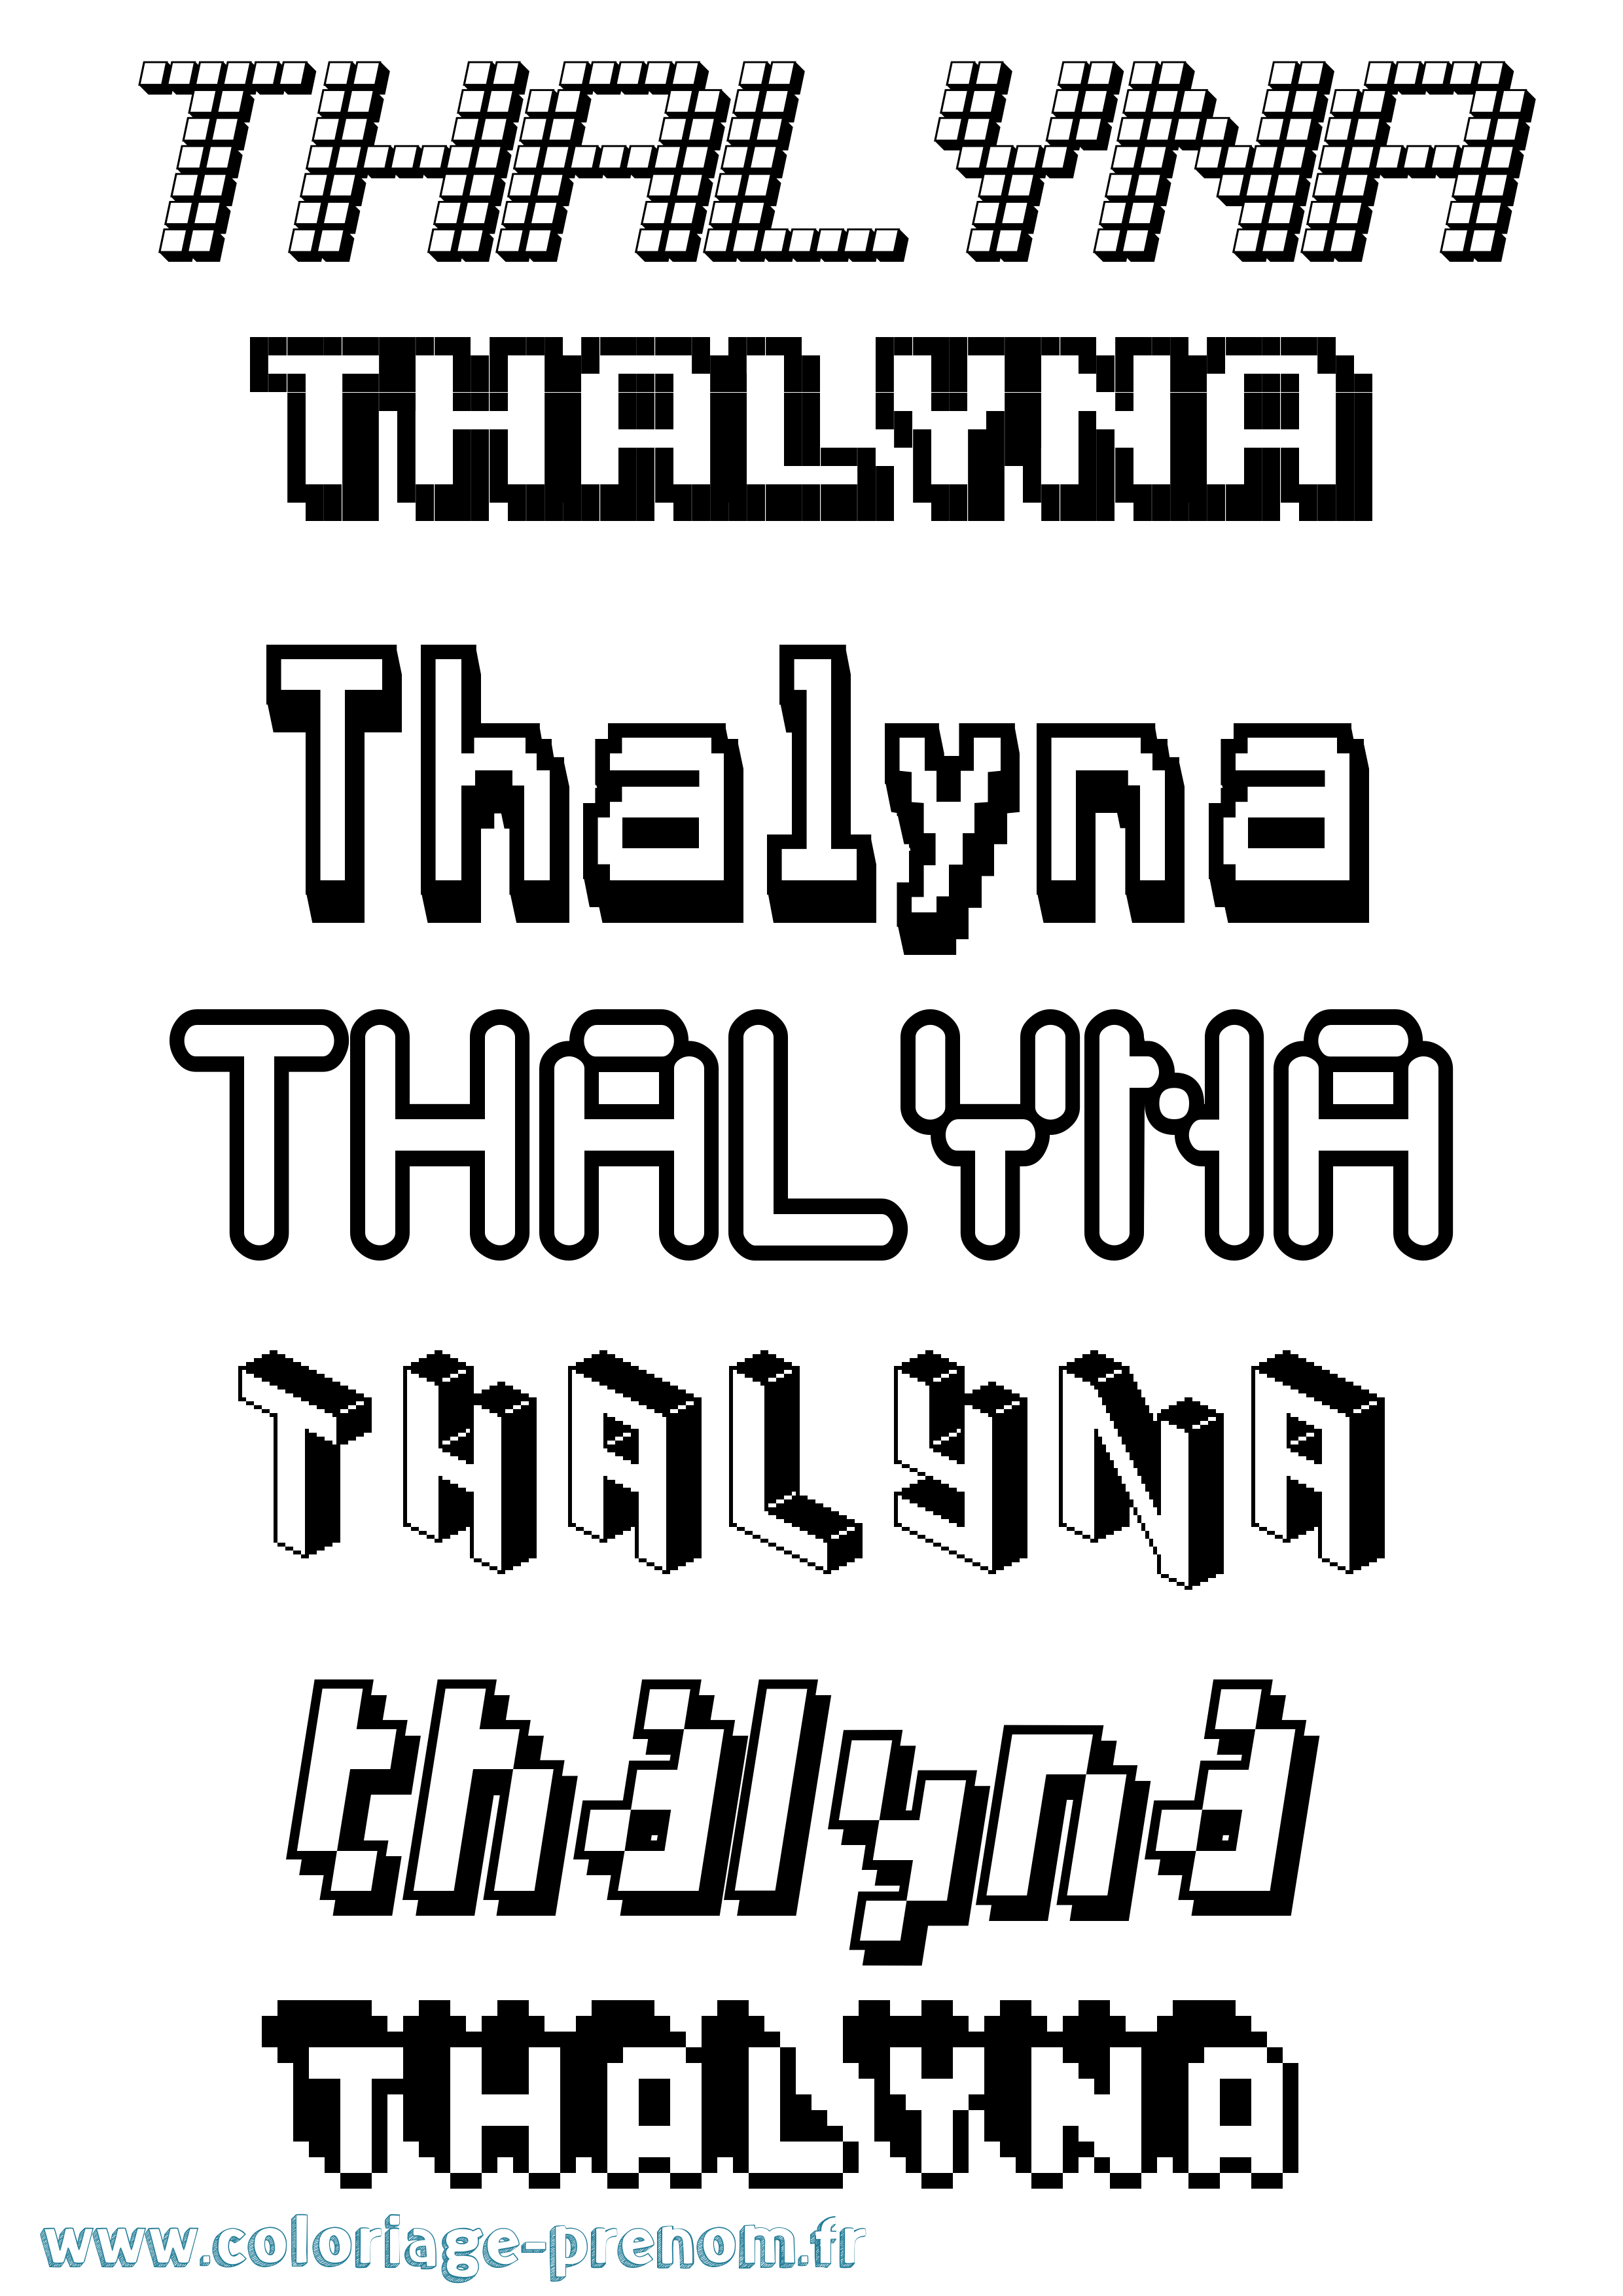 Coloriage prénom Thalyna Pixel